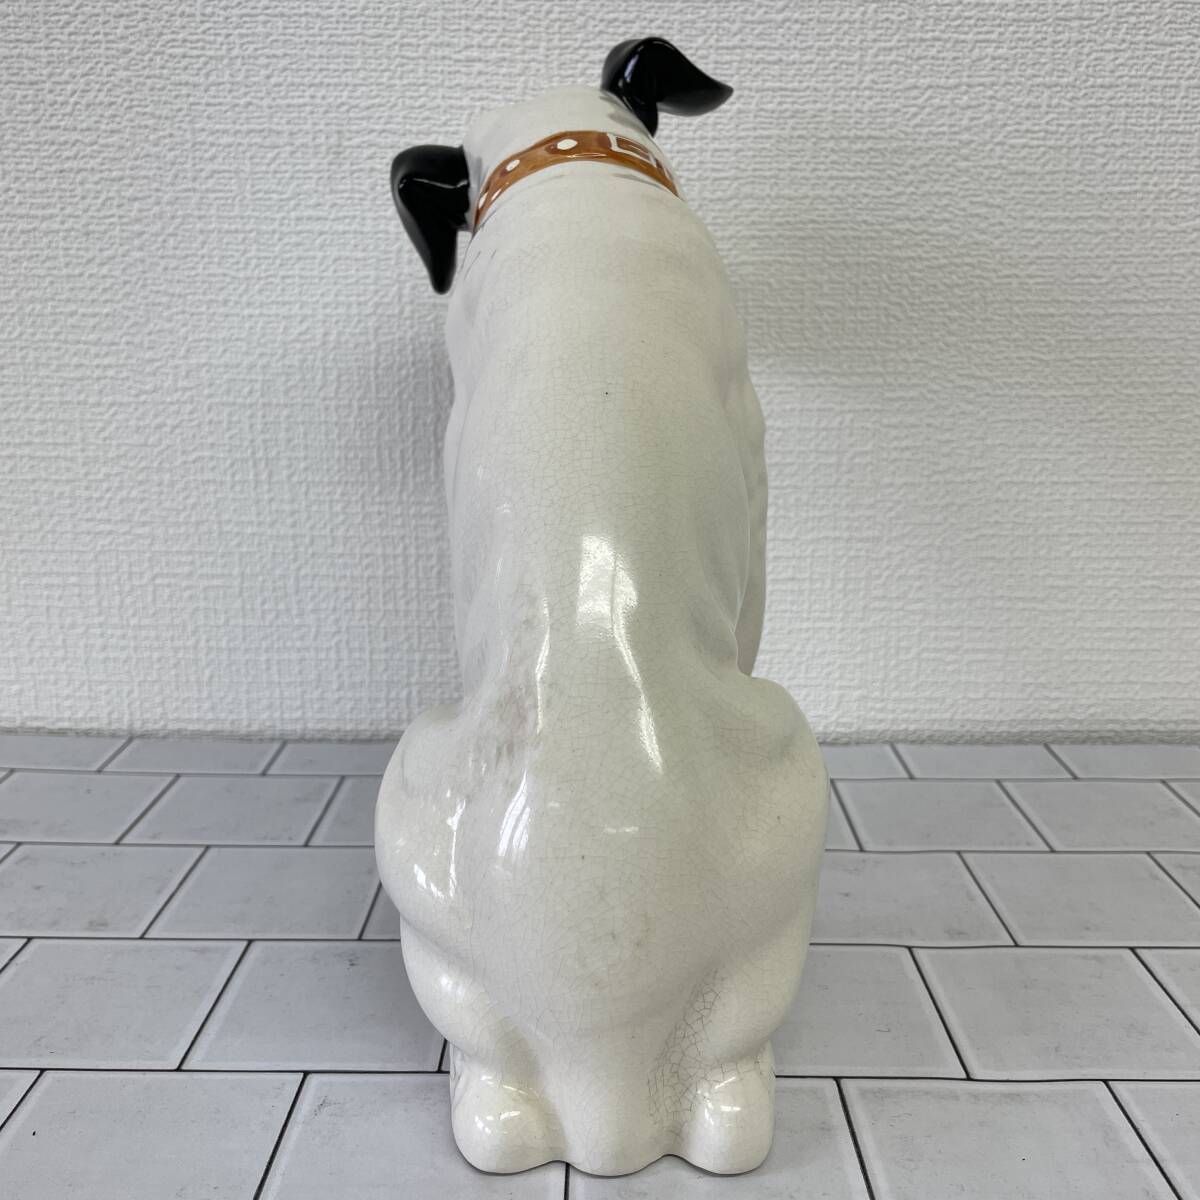 E003-M25-89 Victor ビクター ビクター犬 犬 ニッパー君 高さ 約24cm 陶器 置物 飾り物 アンティーク レトロ コレクションの画像3